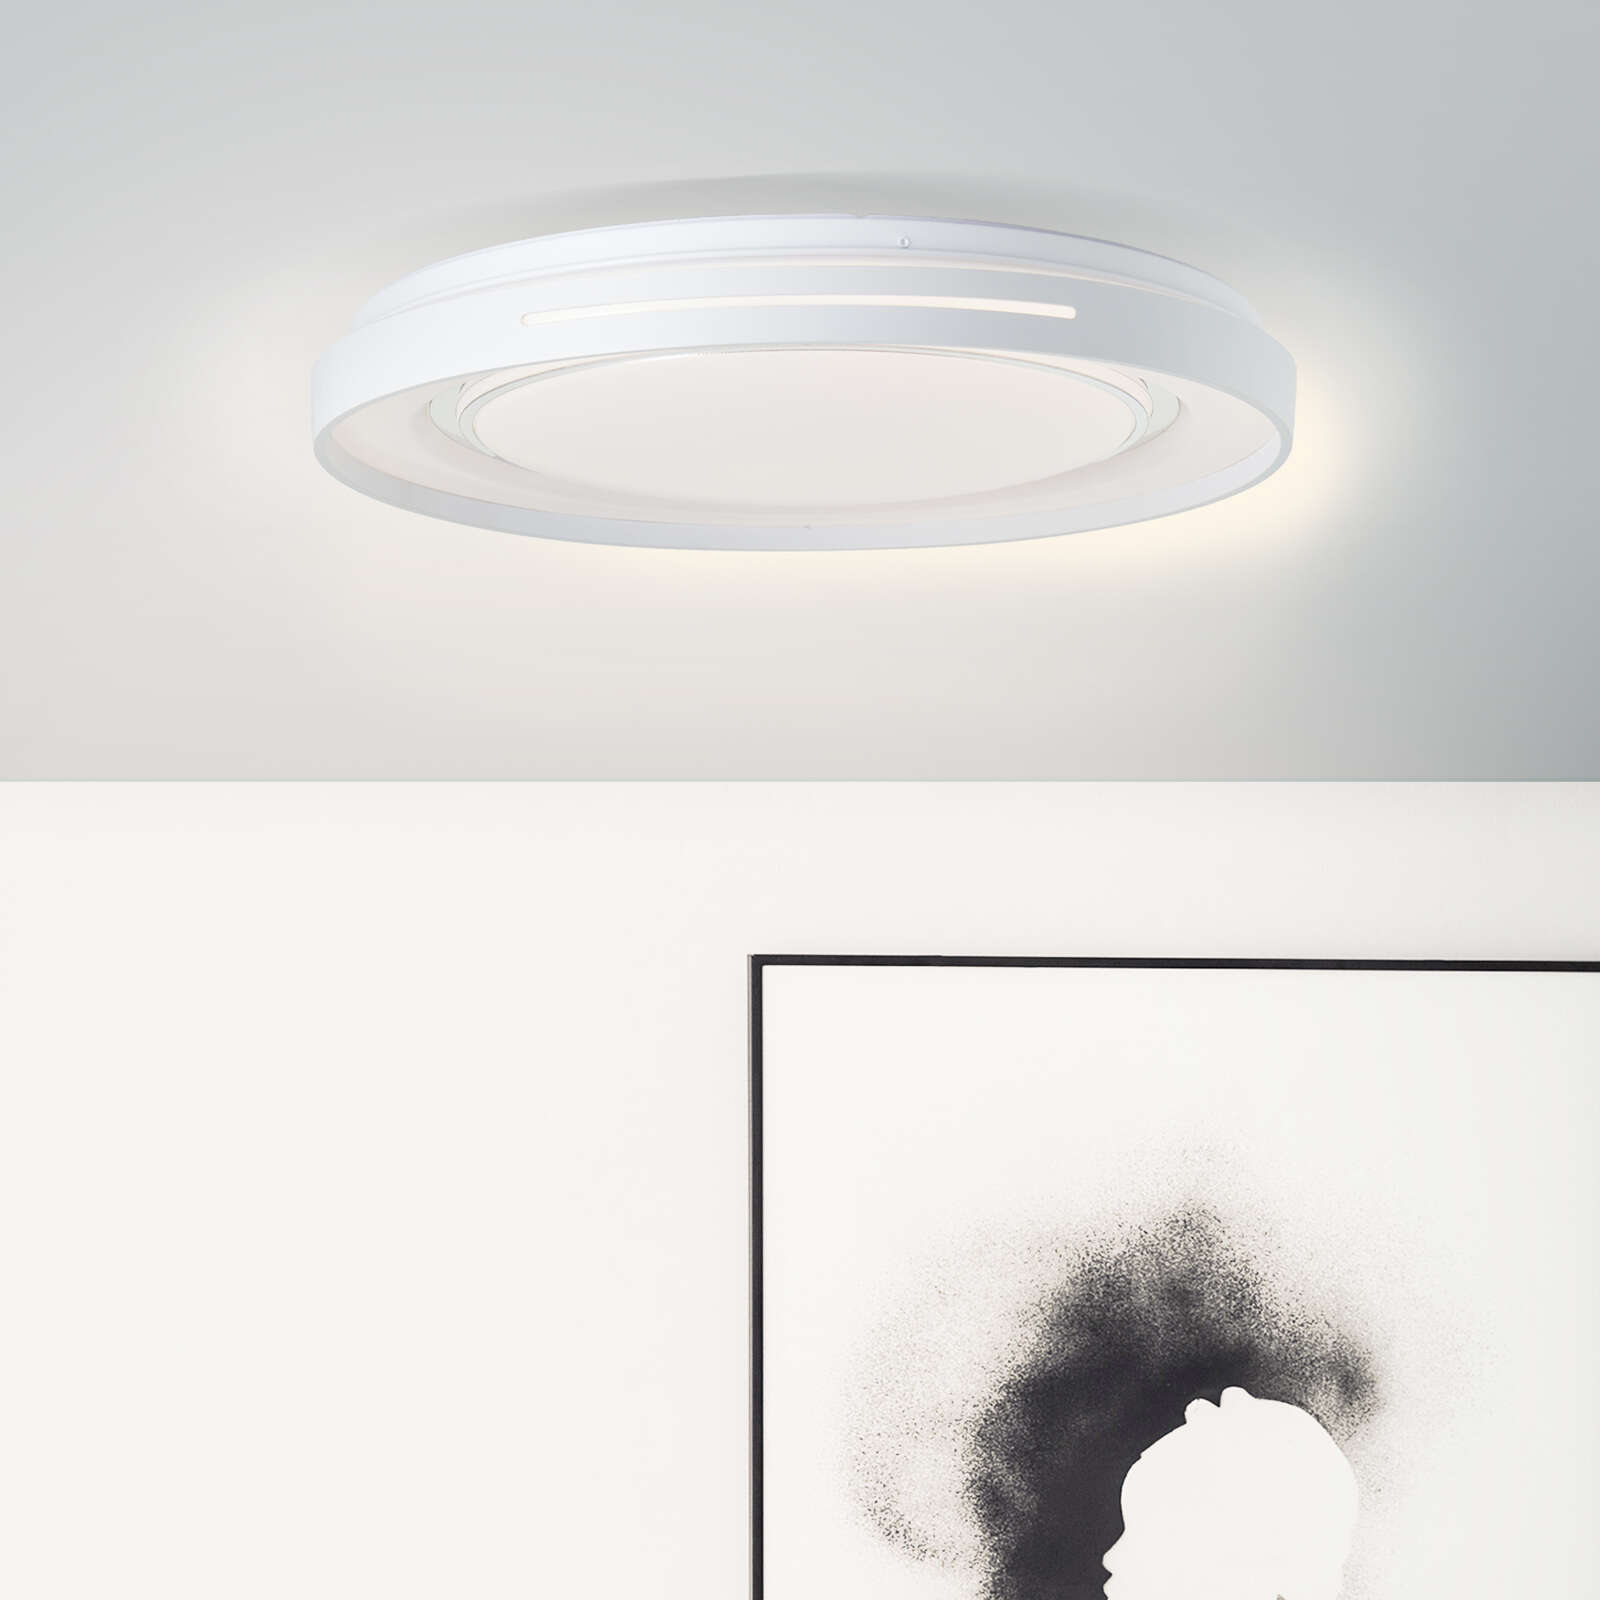             Plastic wall and ceiling light - Aurora 2 - Metallic
        